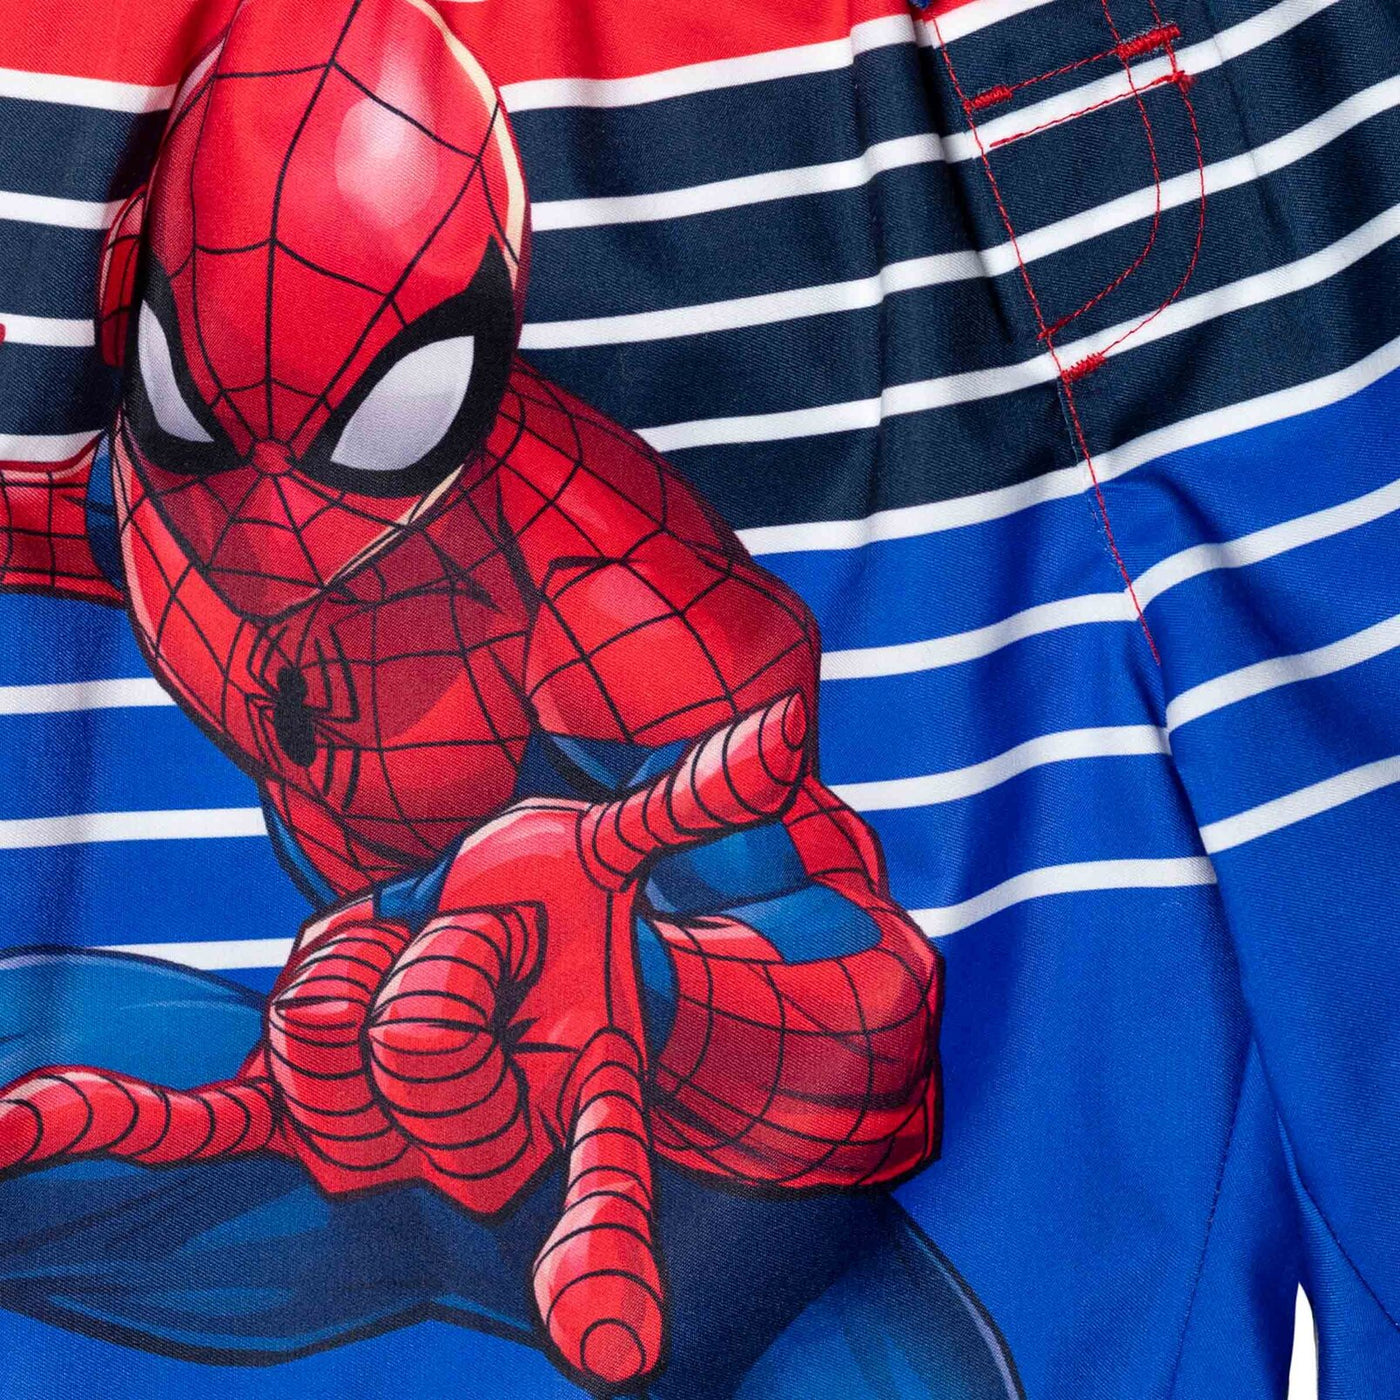 Marvel Spider-Man Toddler Boys Rash Guard and Swim Trunks Outfit Set